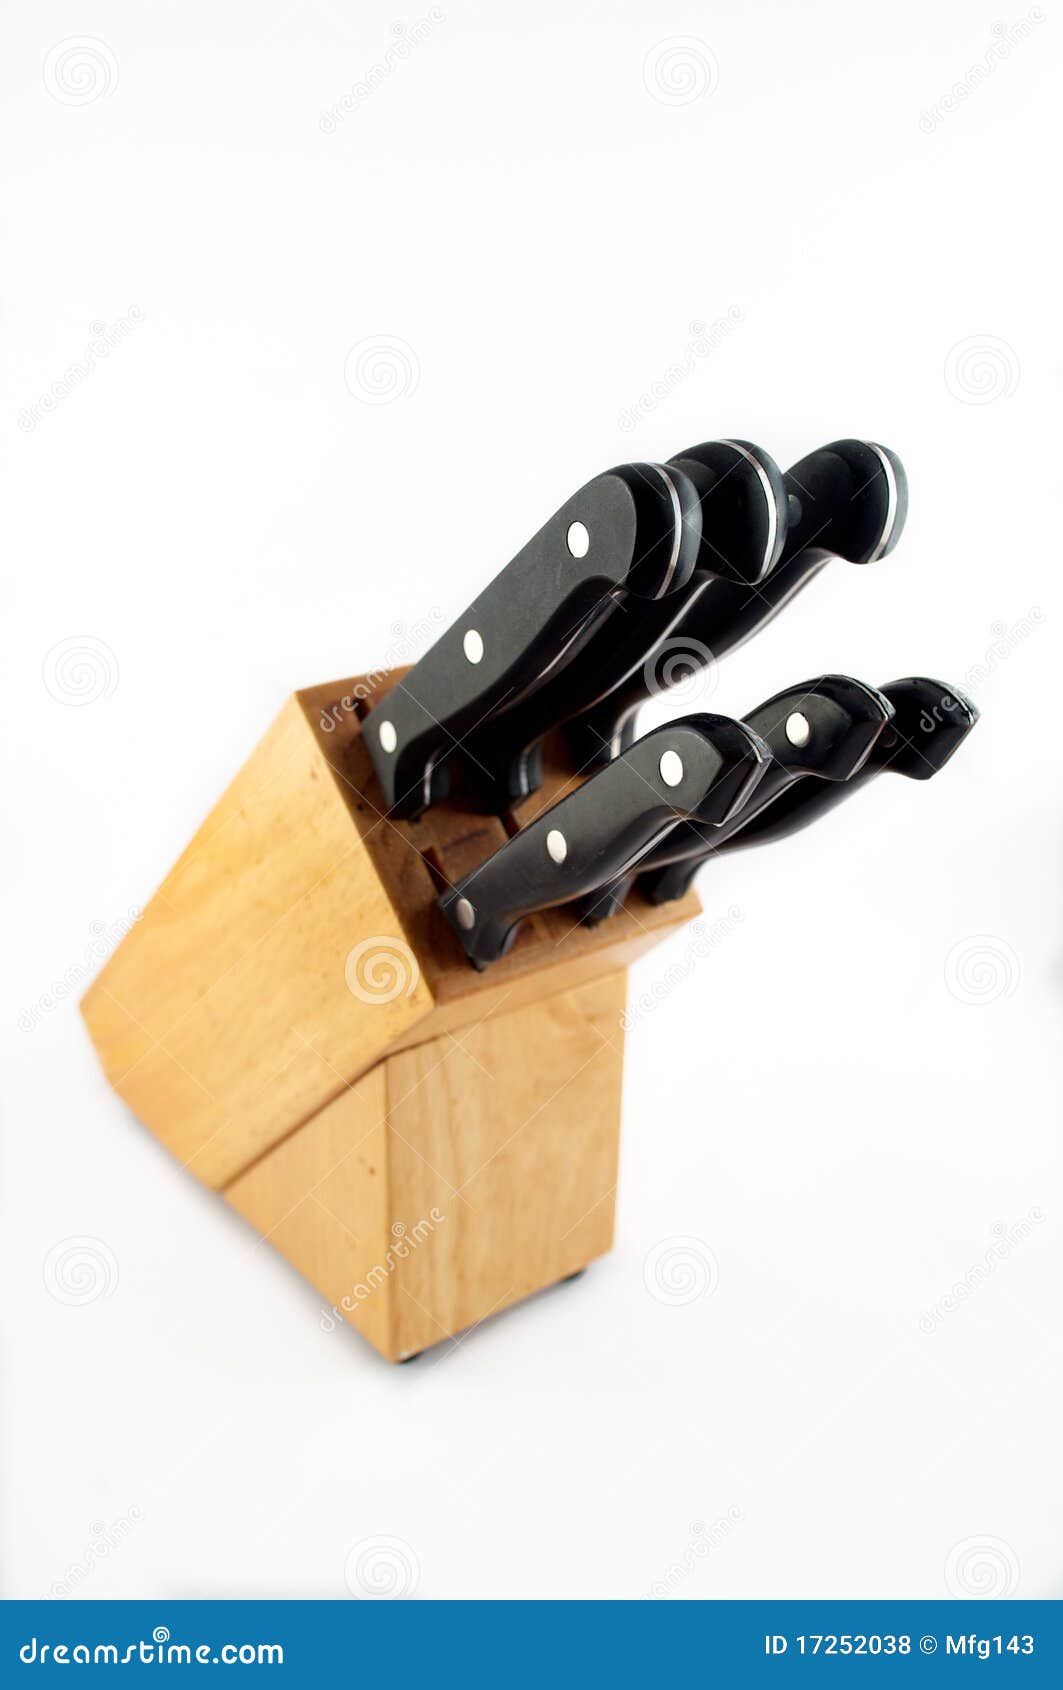 Set of steel knives in a wooden block.